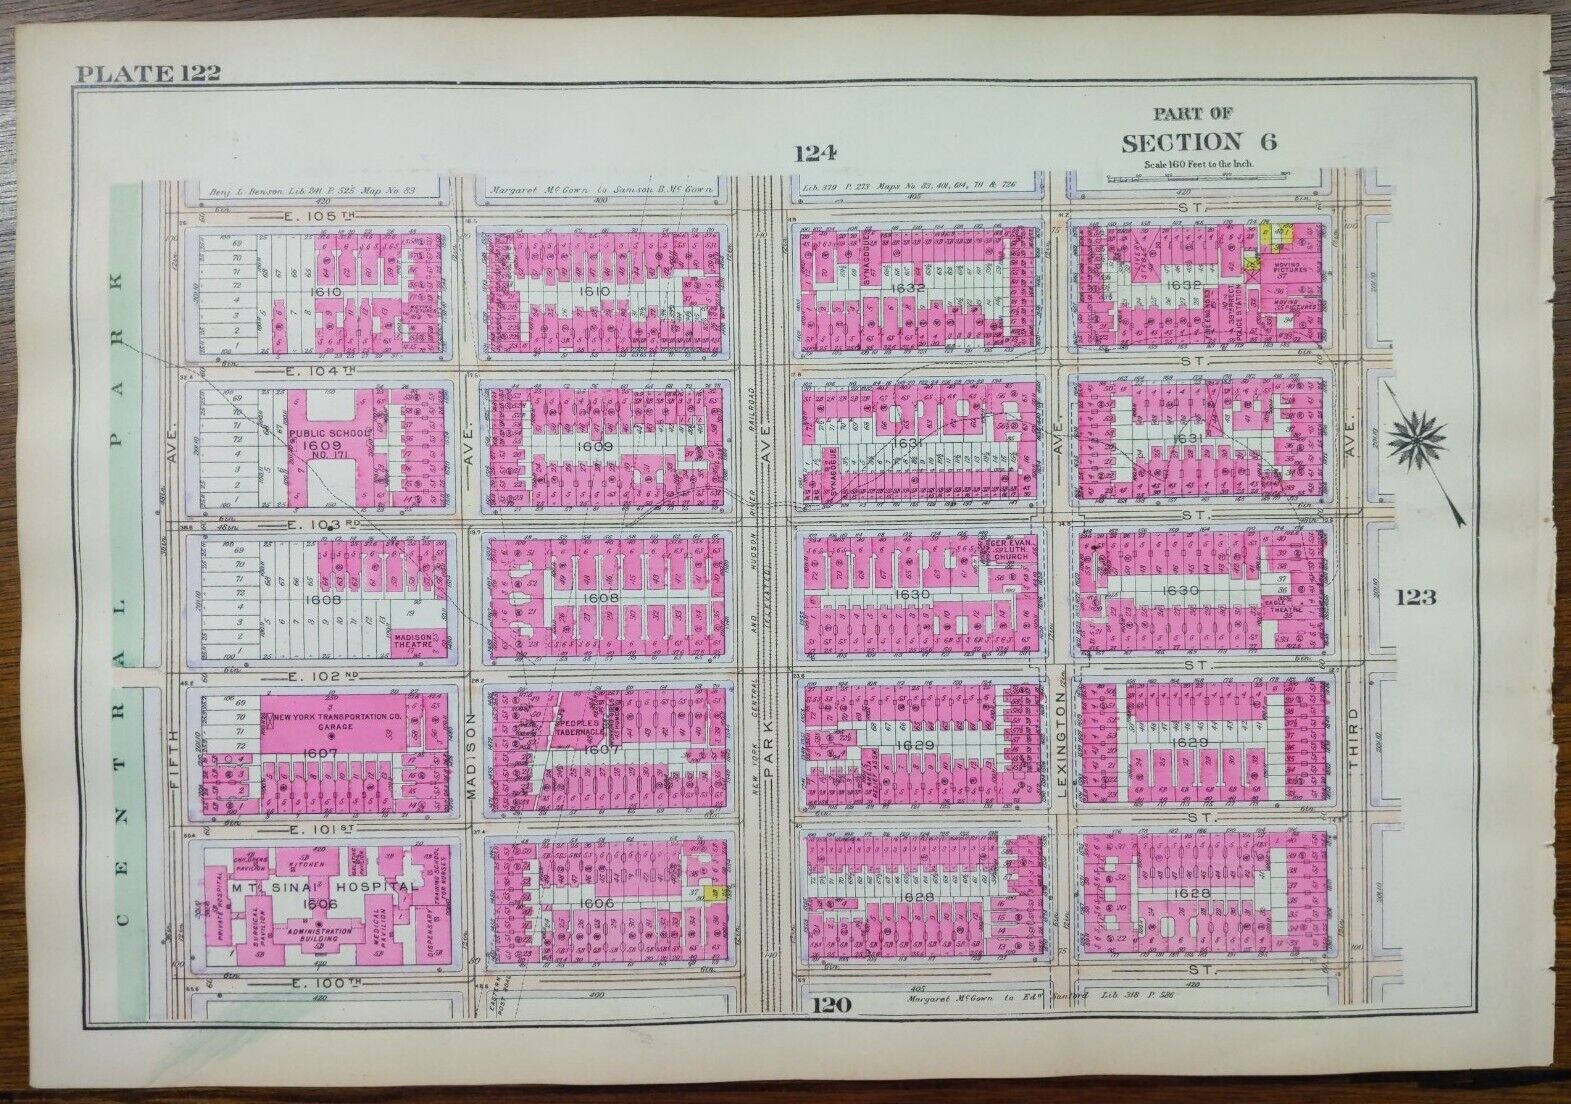 1916 MOUNT SINAI HOSPITAL CENTRAL PARK MANHATTAN NEW YORK CITY NY Street Map 